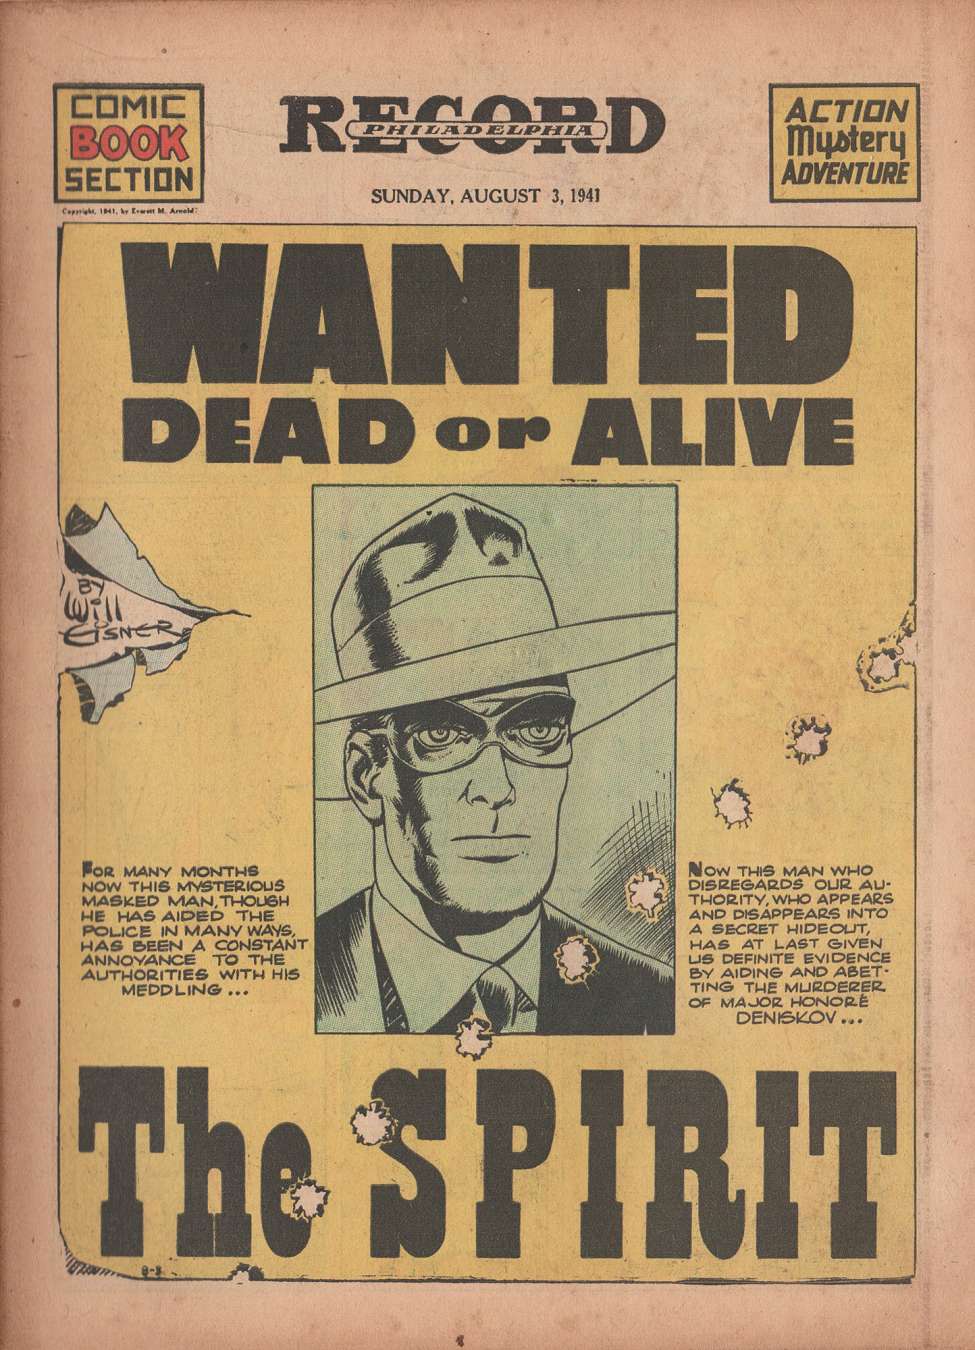 Comic Book Cover For The Spirit (1941-08-03) - Philadelphia Record